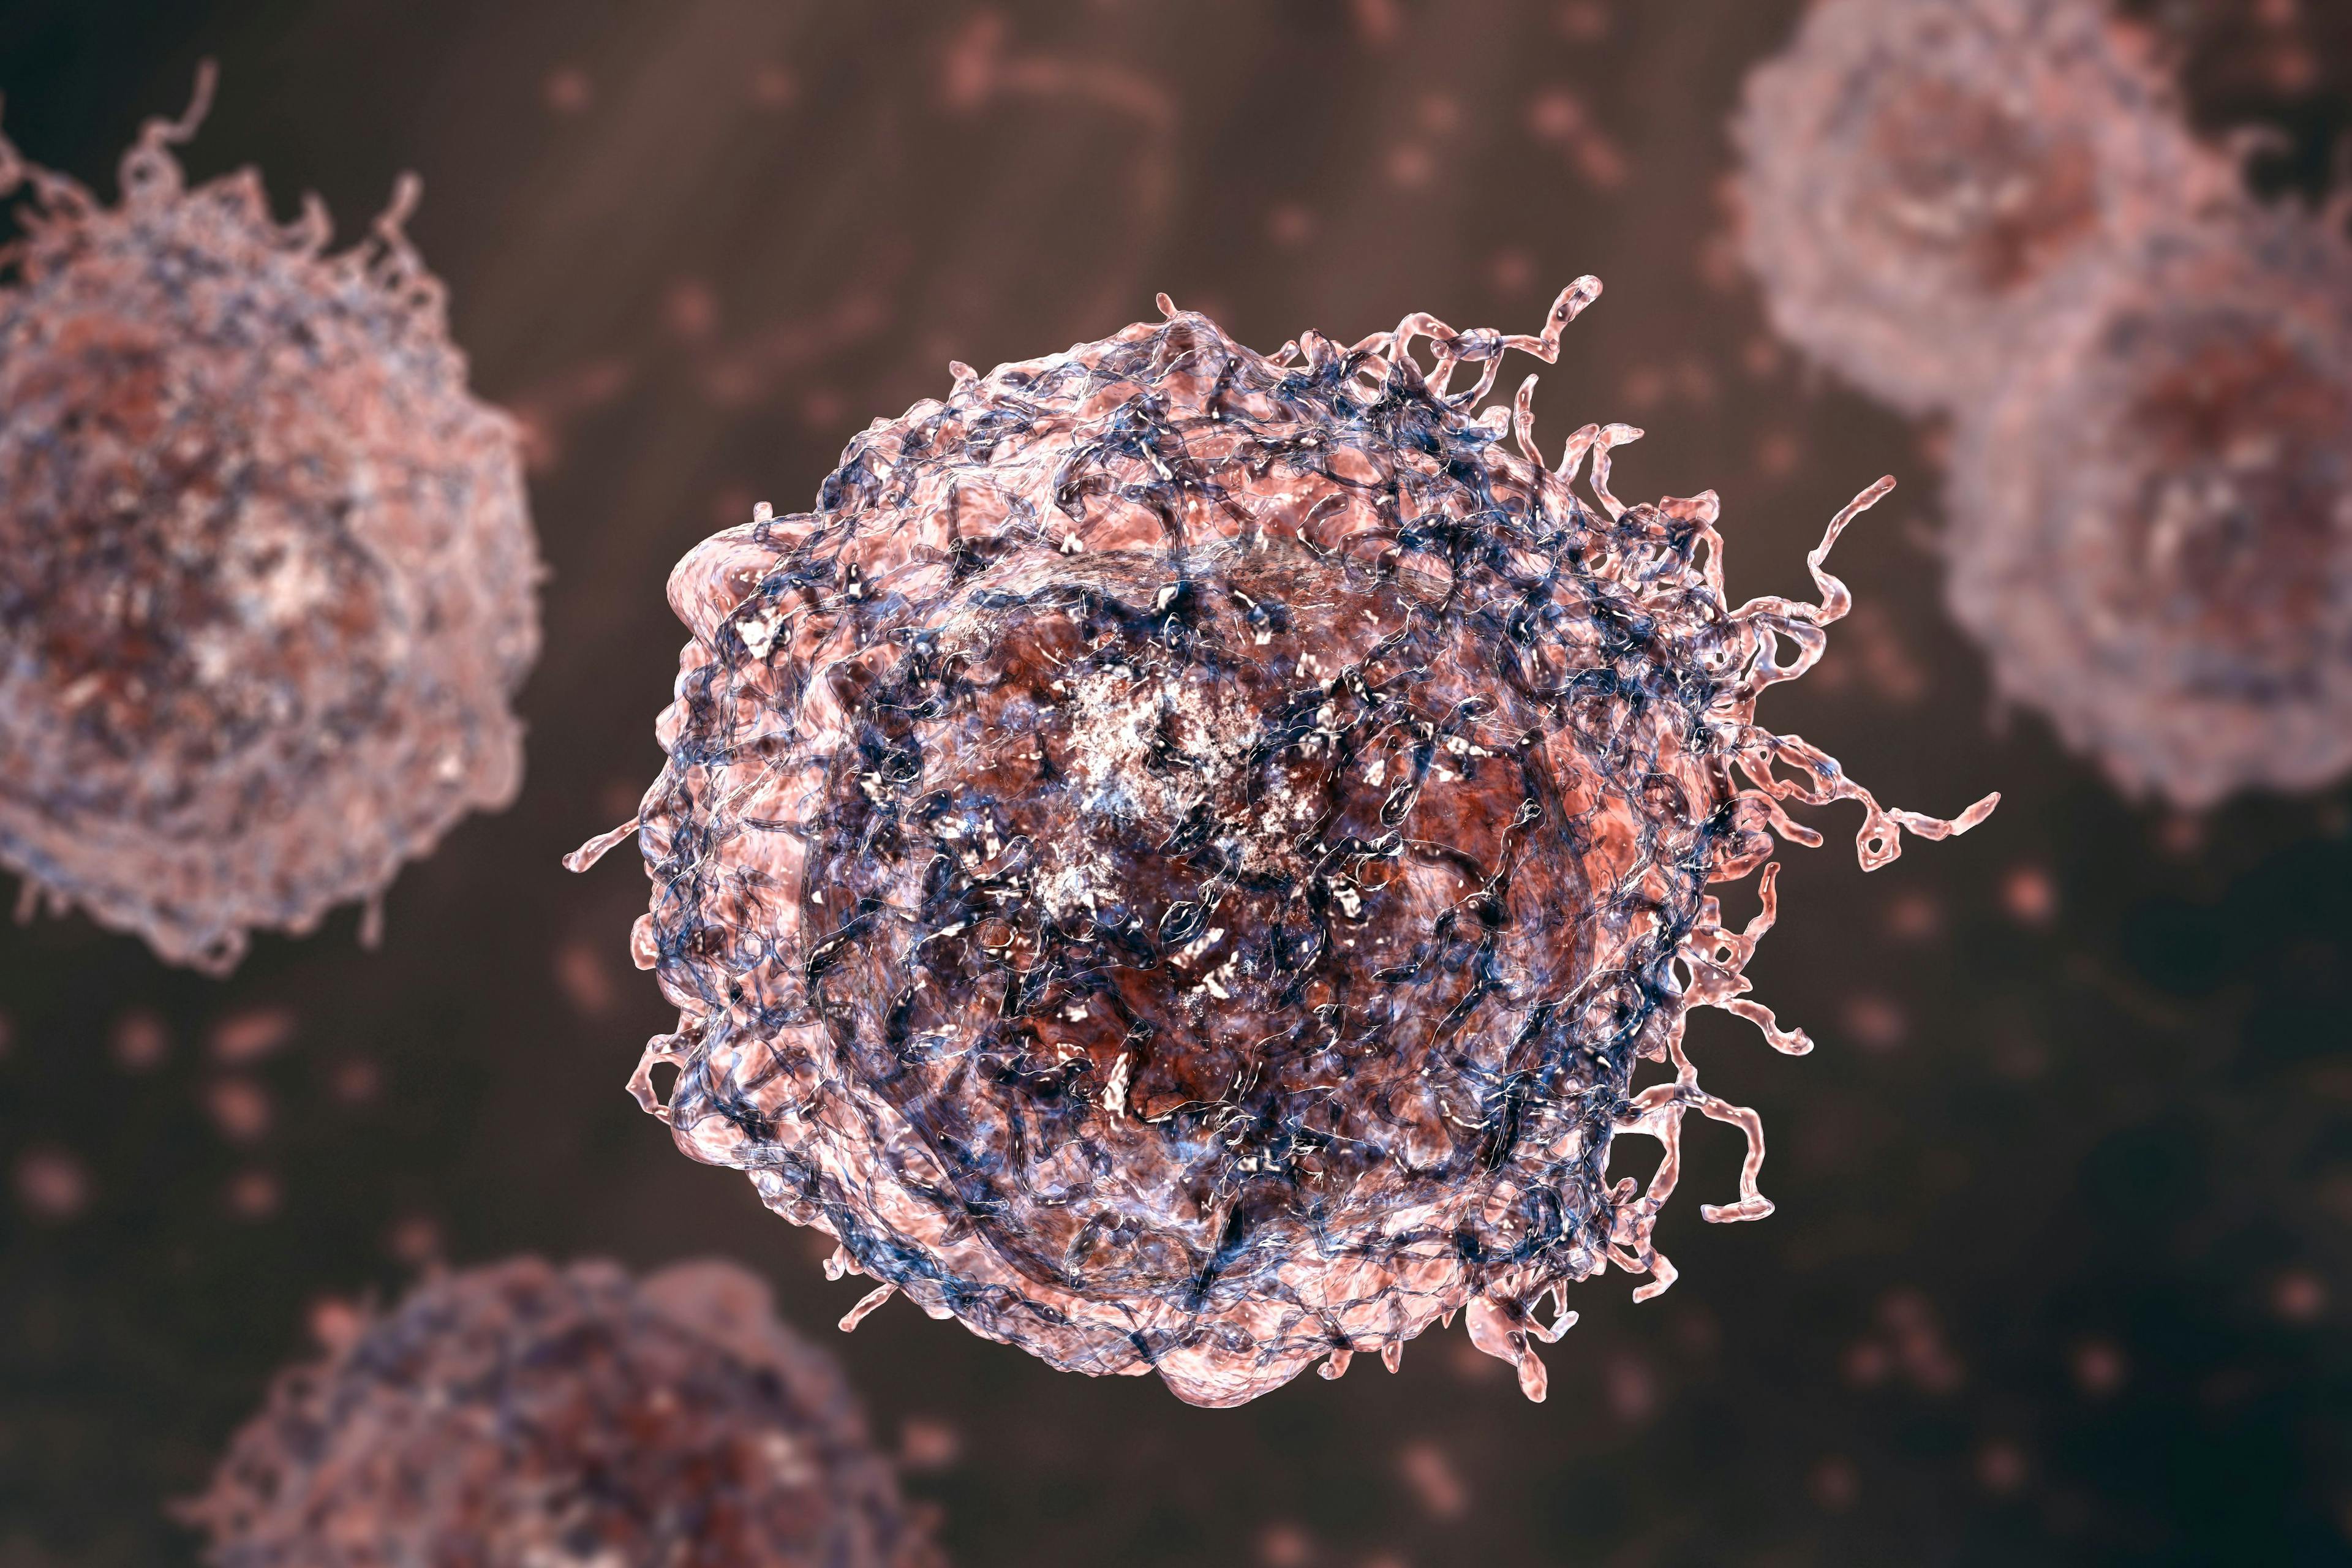 Cancer cells, 3D illustration | Image Credit: Dr_Microbe - stock.adobe.com